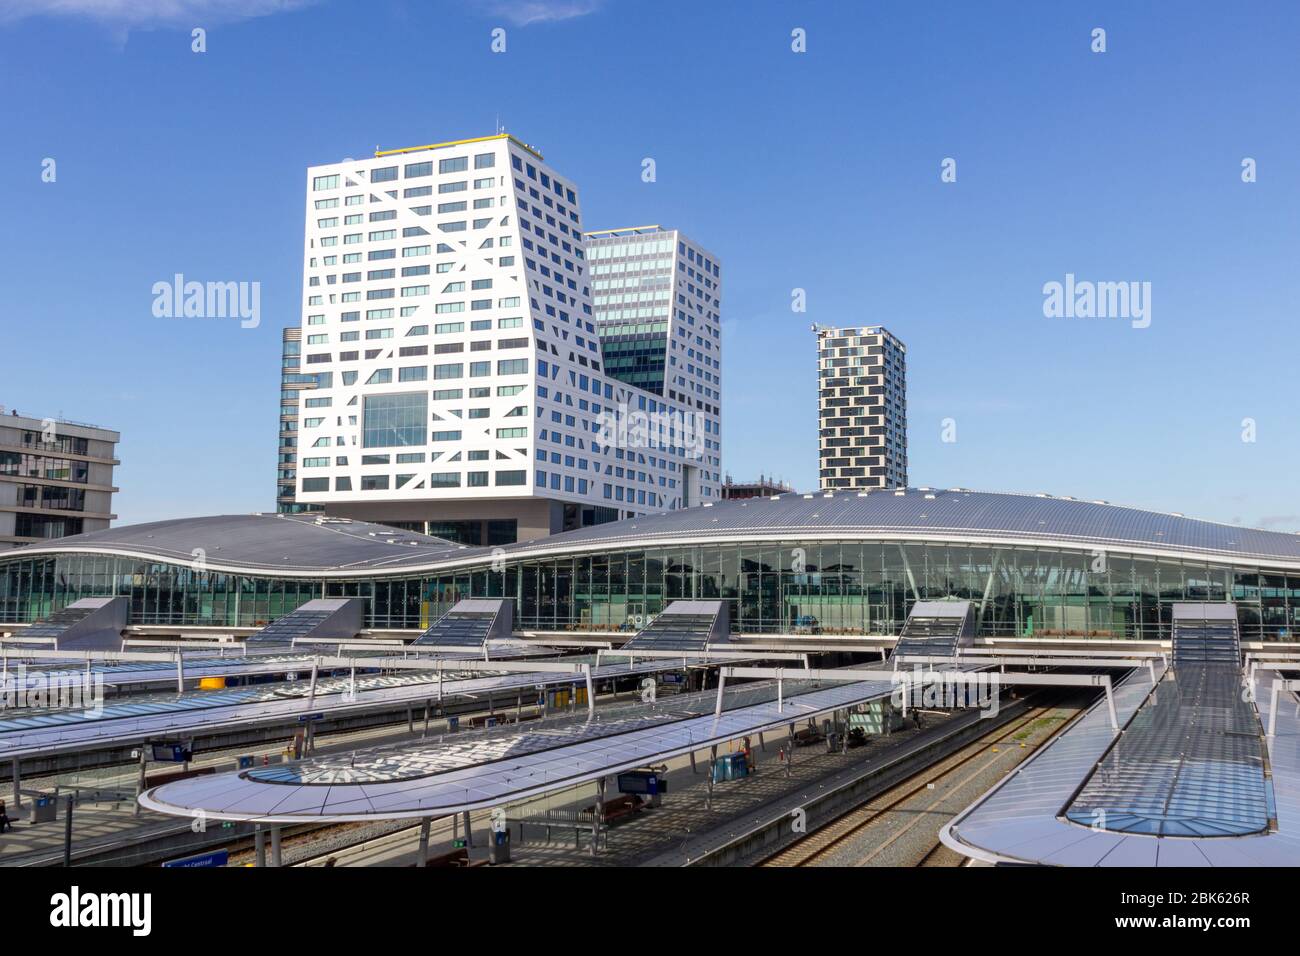 Cityscape of Utrecht railway and surroundings Stock Photo